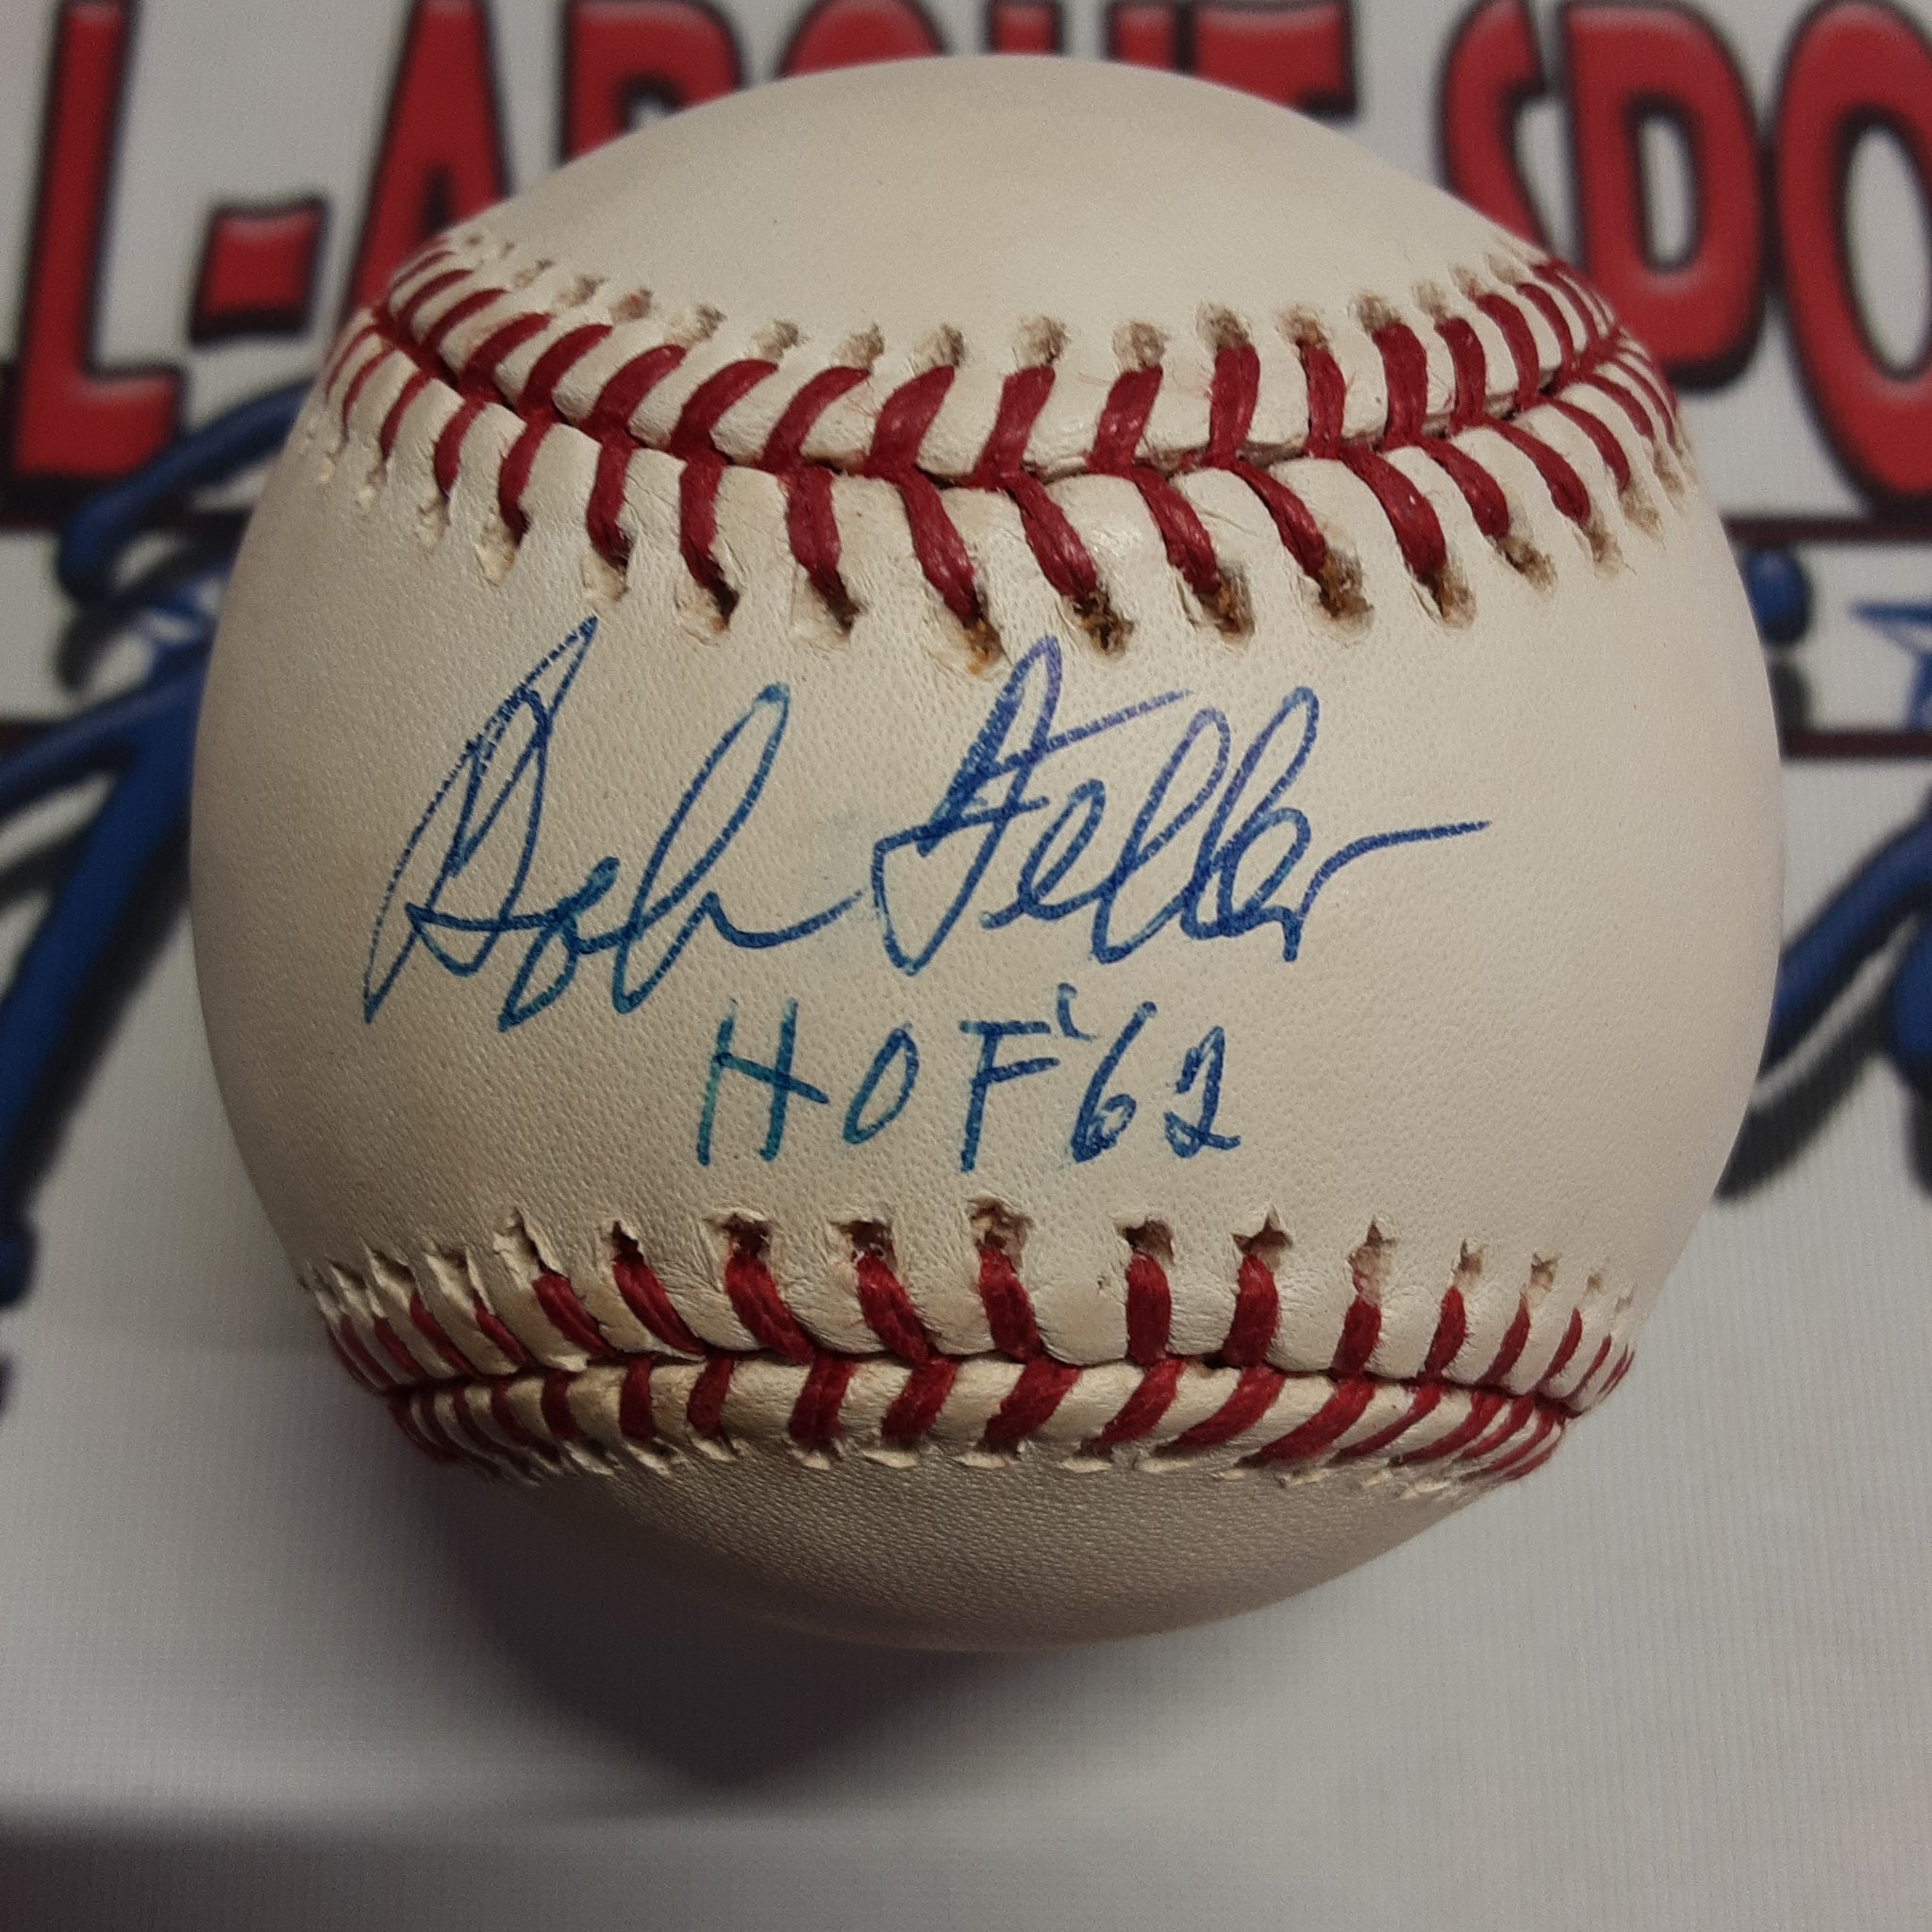 Bob Feller Authentic Signed Baseball Autographed with Inscription JSA.